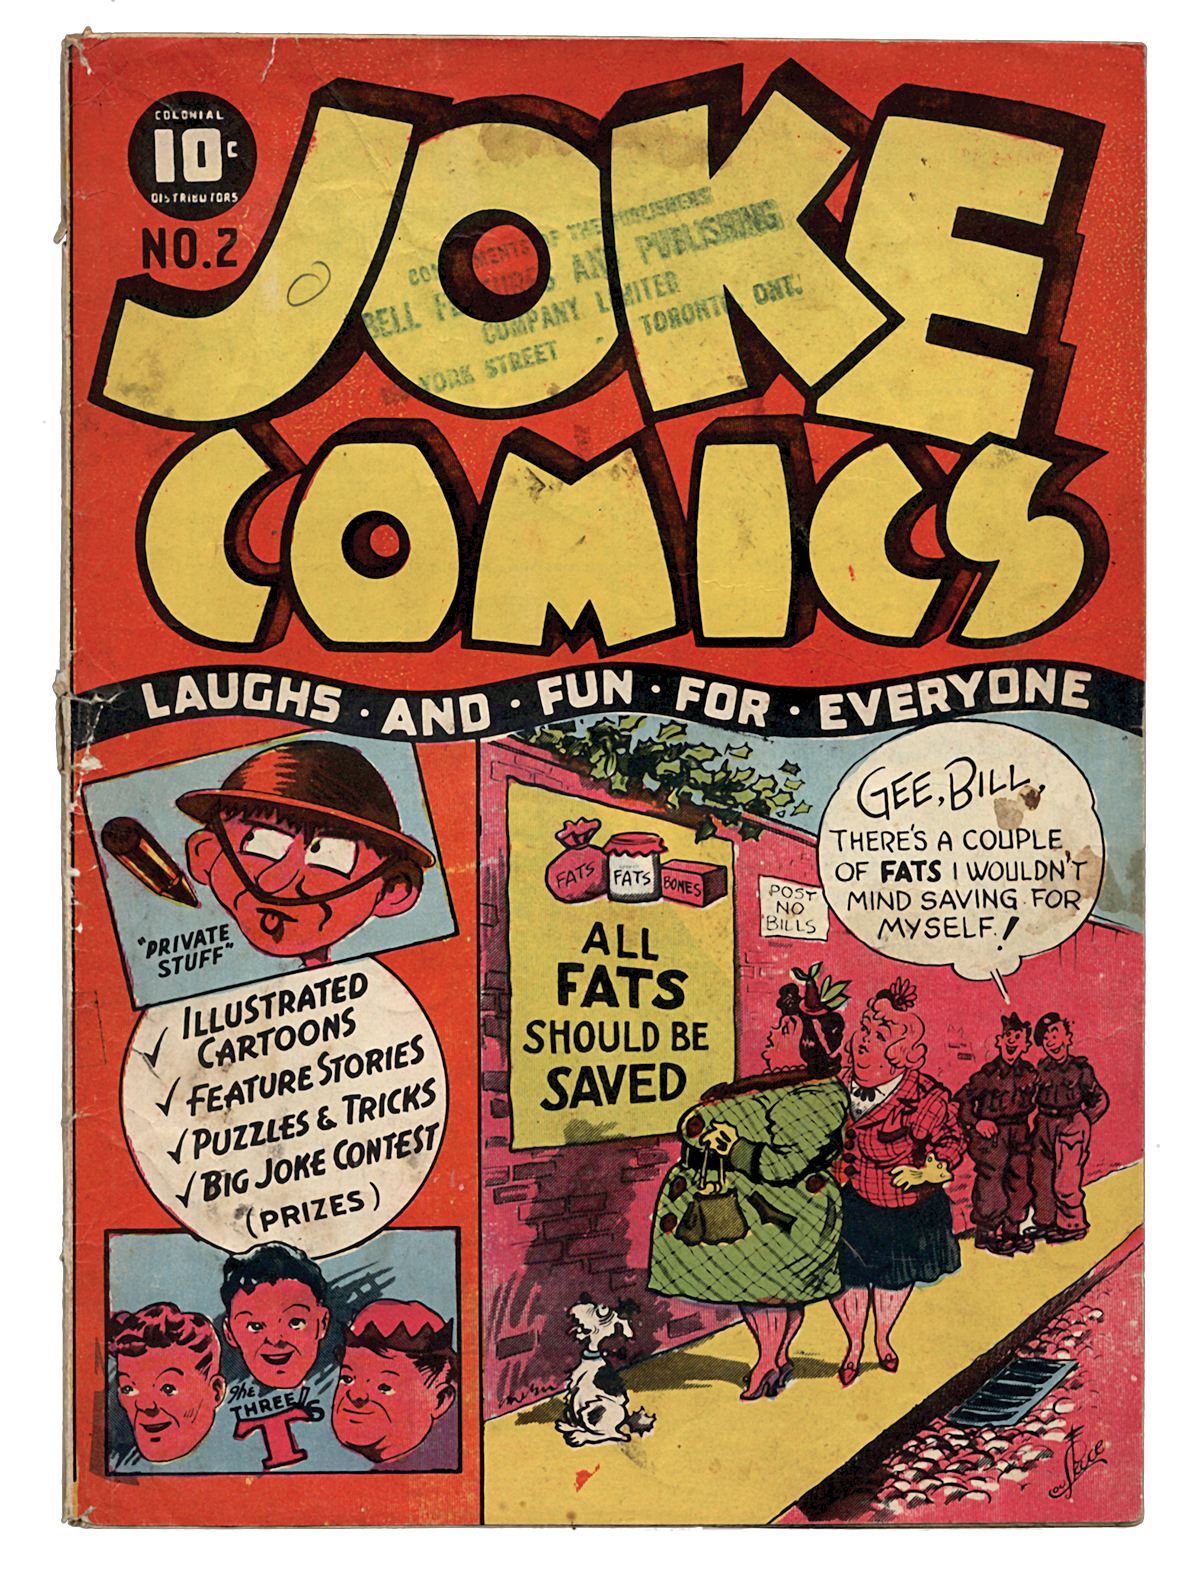 Photo of Joke Comics No. 2